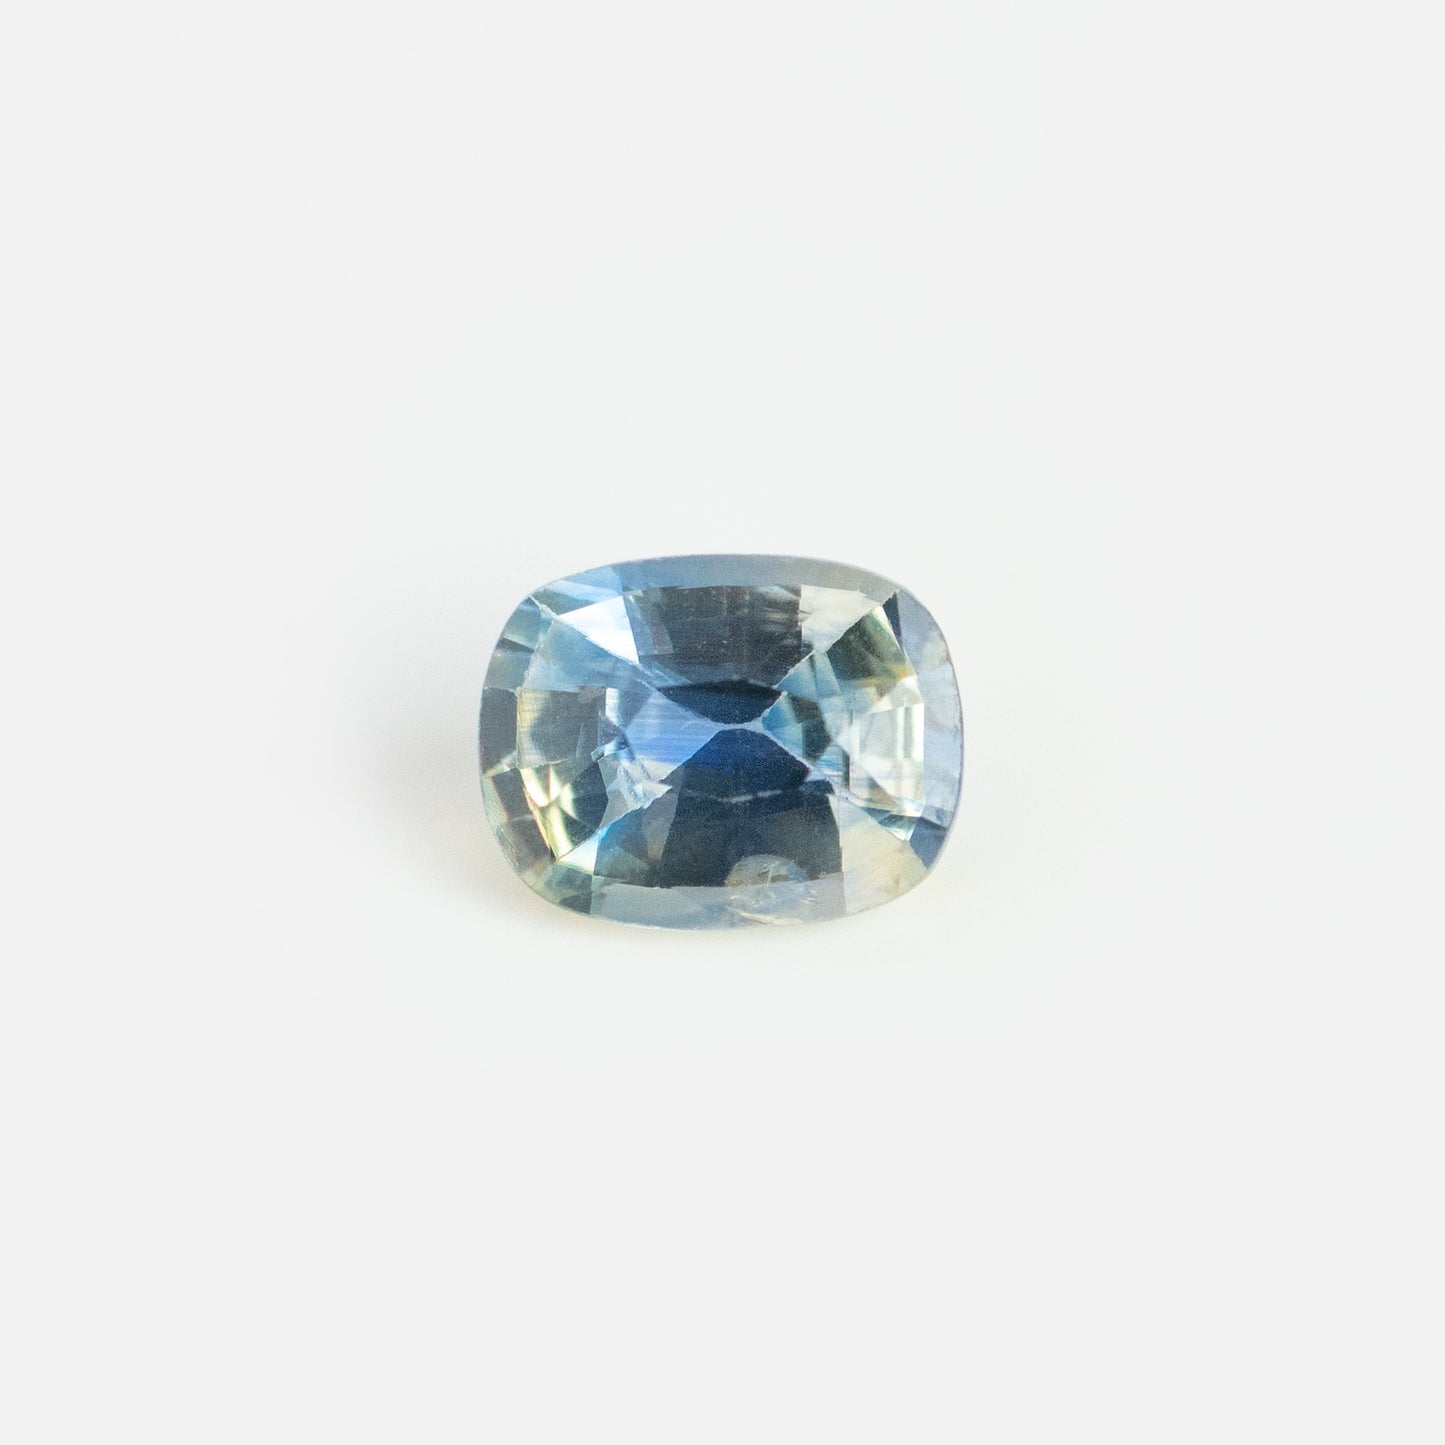 Cushion Bicolor Blue Sapphire Loose Gemstone